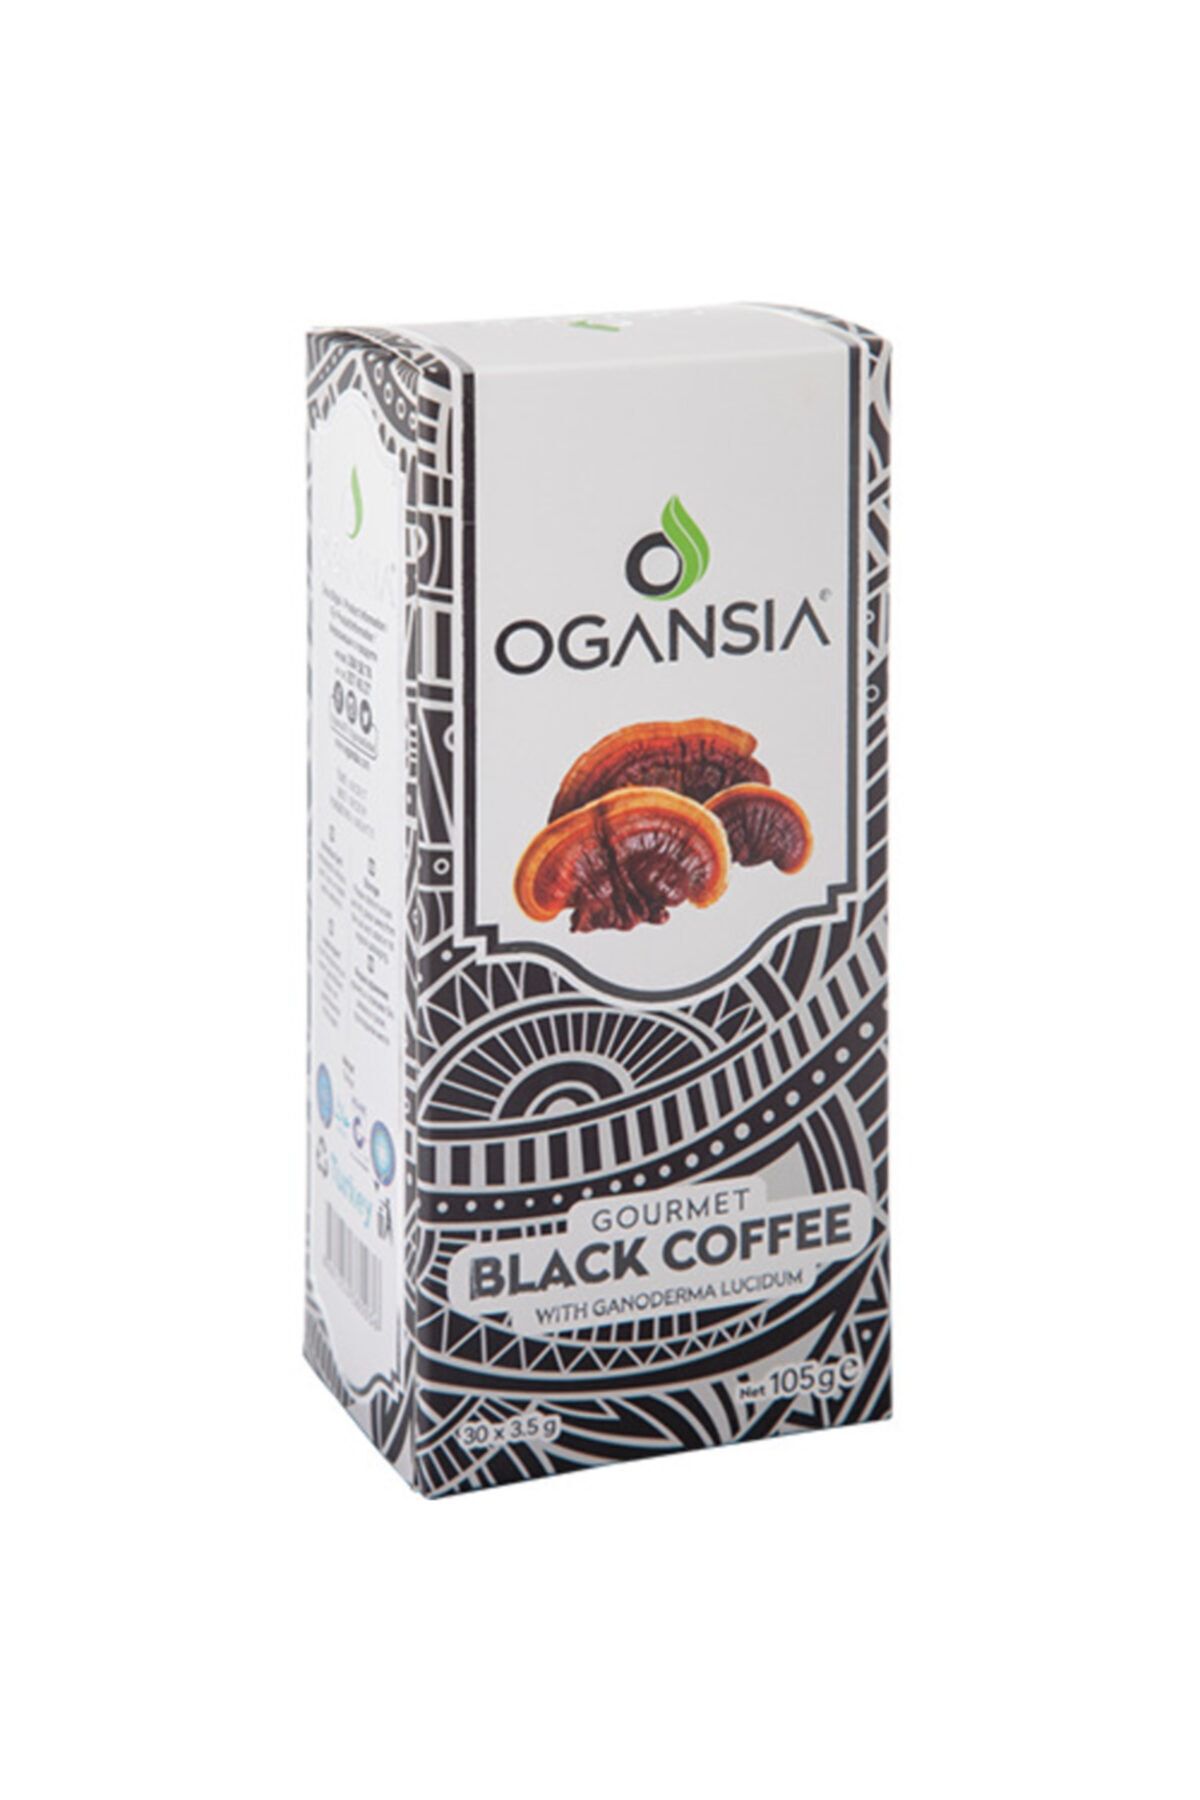 Ogansia Black Coffe 30x3,5gr-organik-doğal-ogansia Yetkili Mağaza-store